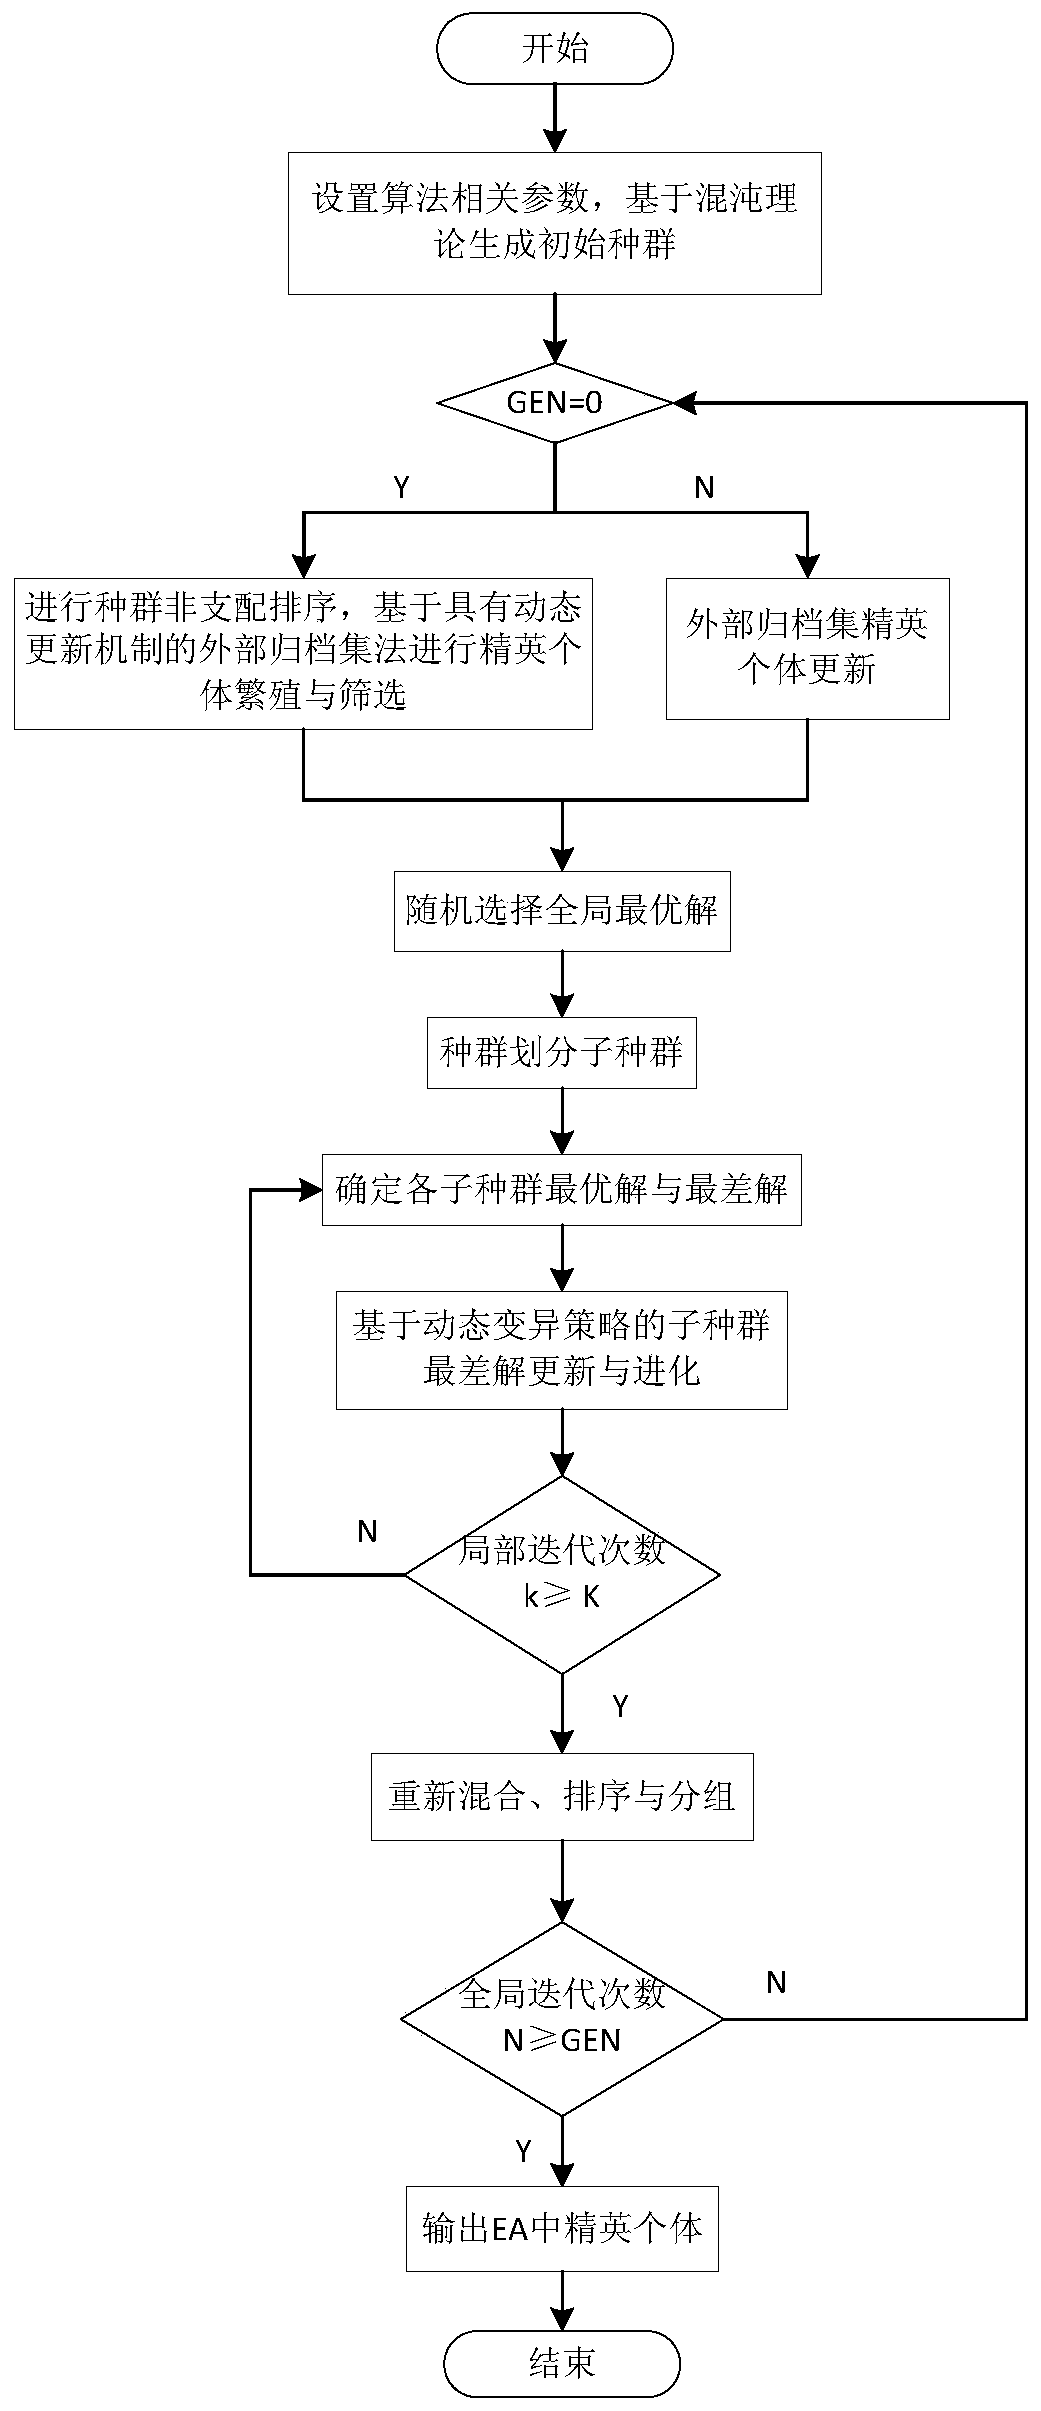 A Reservoir Scheduling Method Based on Multi-objective Hybrid Leapfrog Algorithm